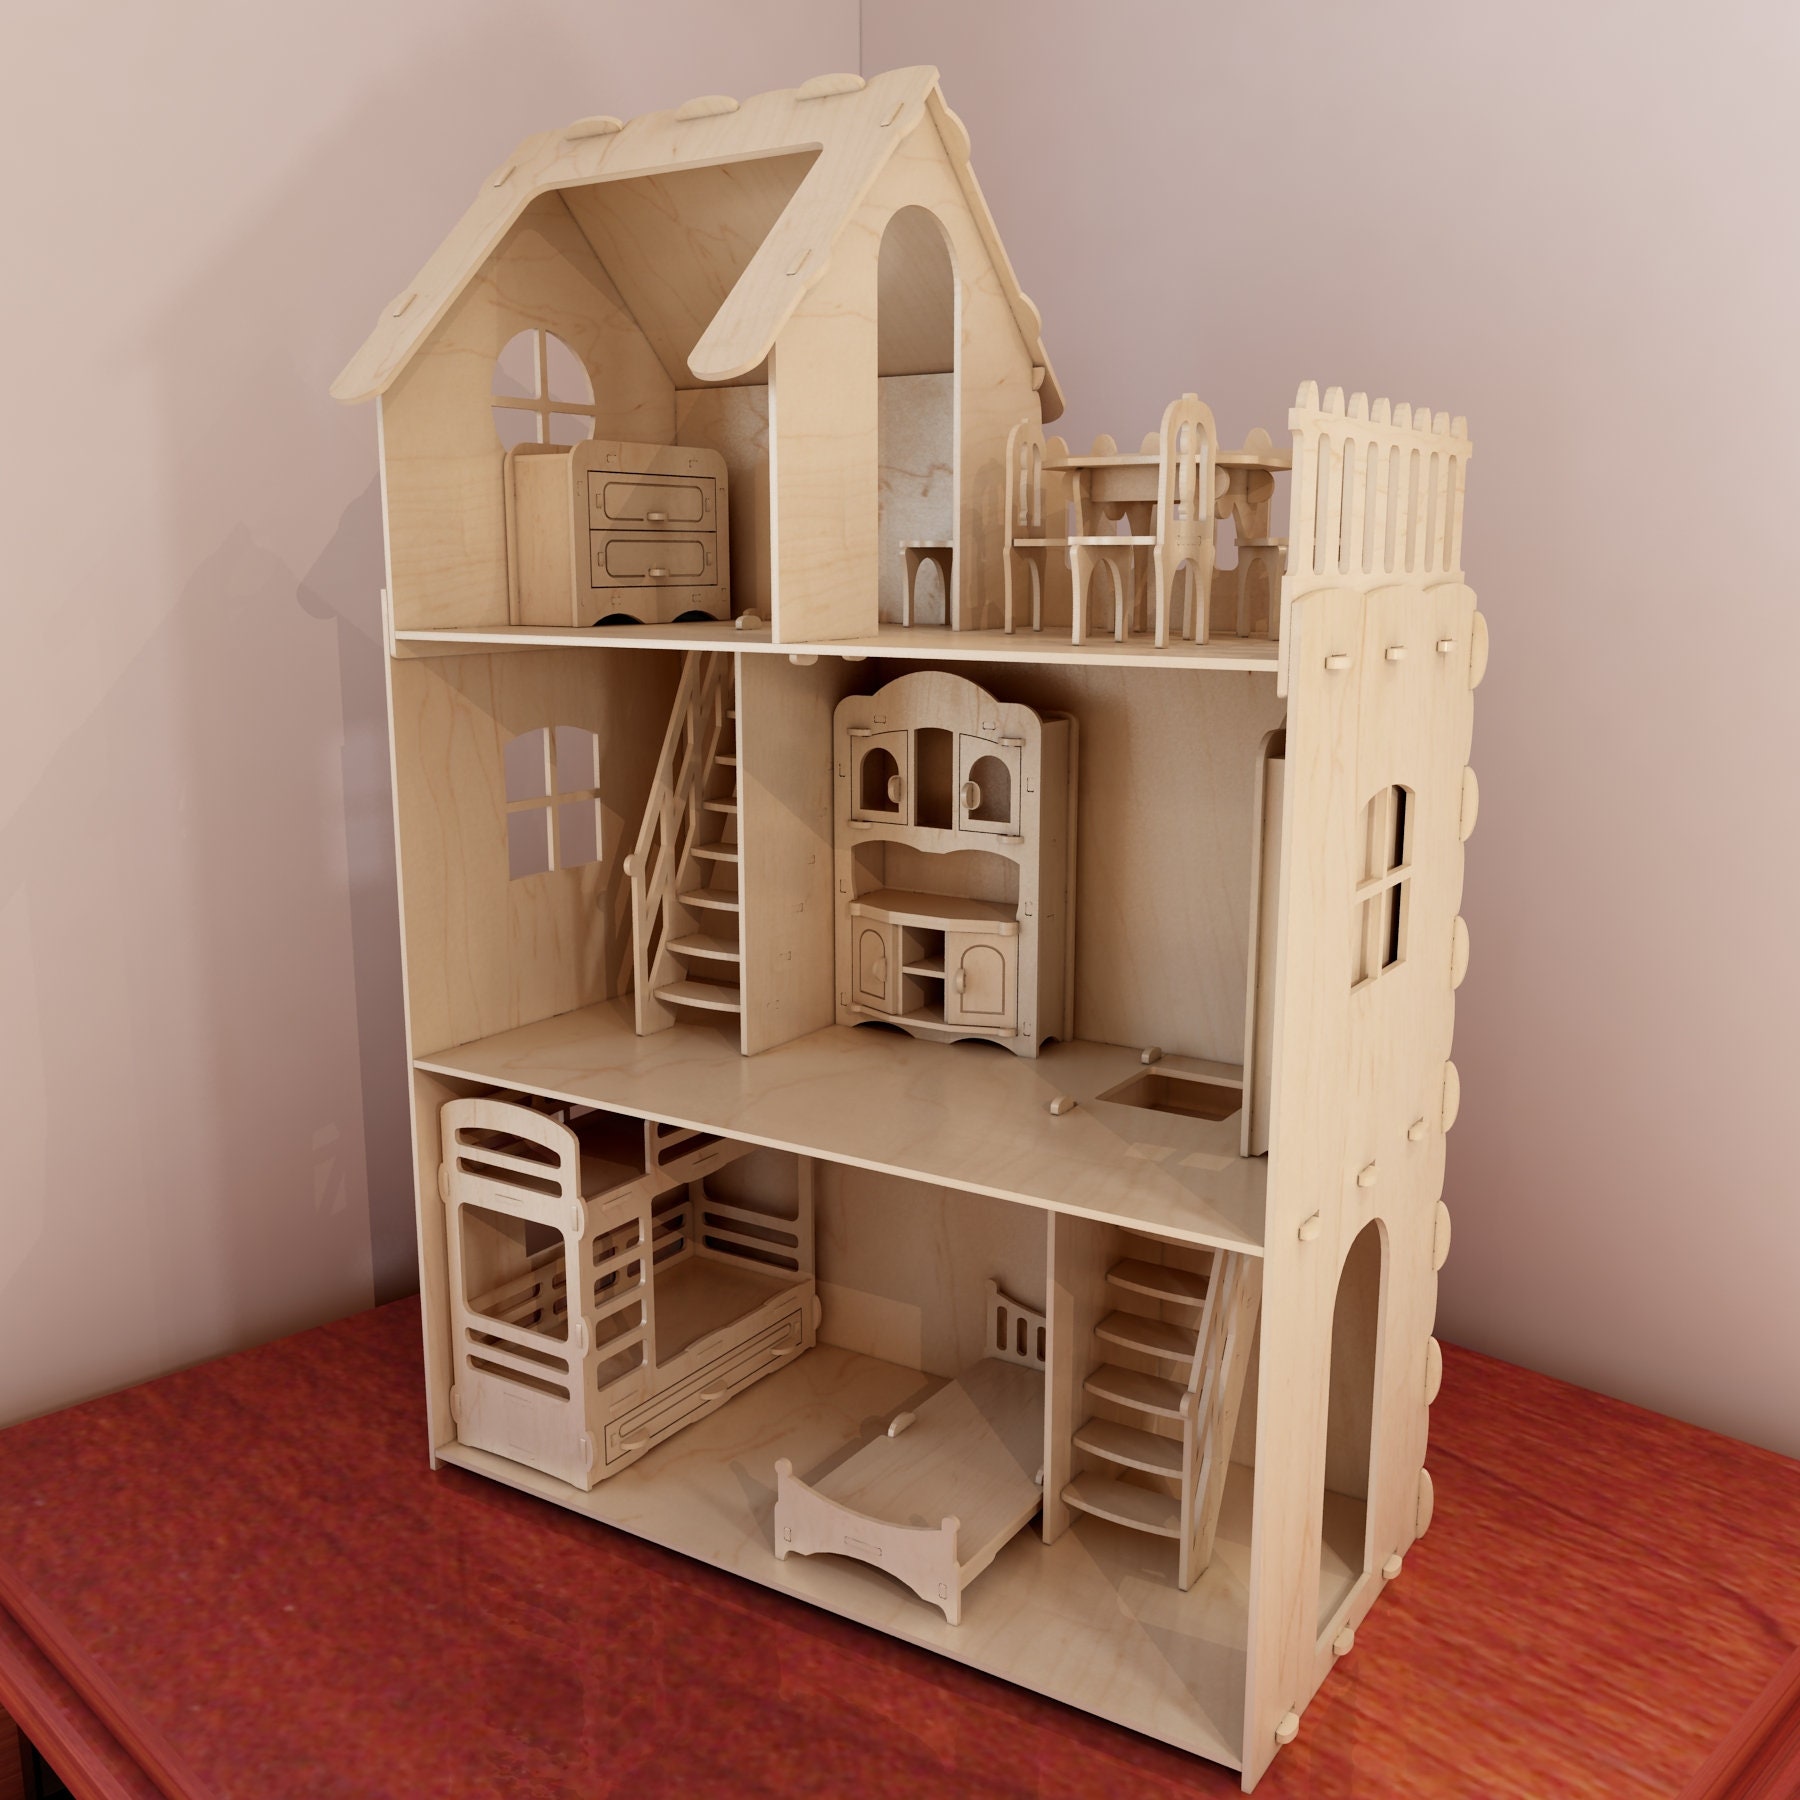 Wooden dollhouse plans